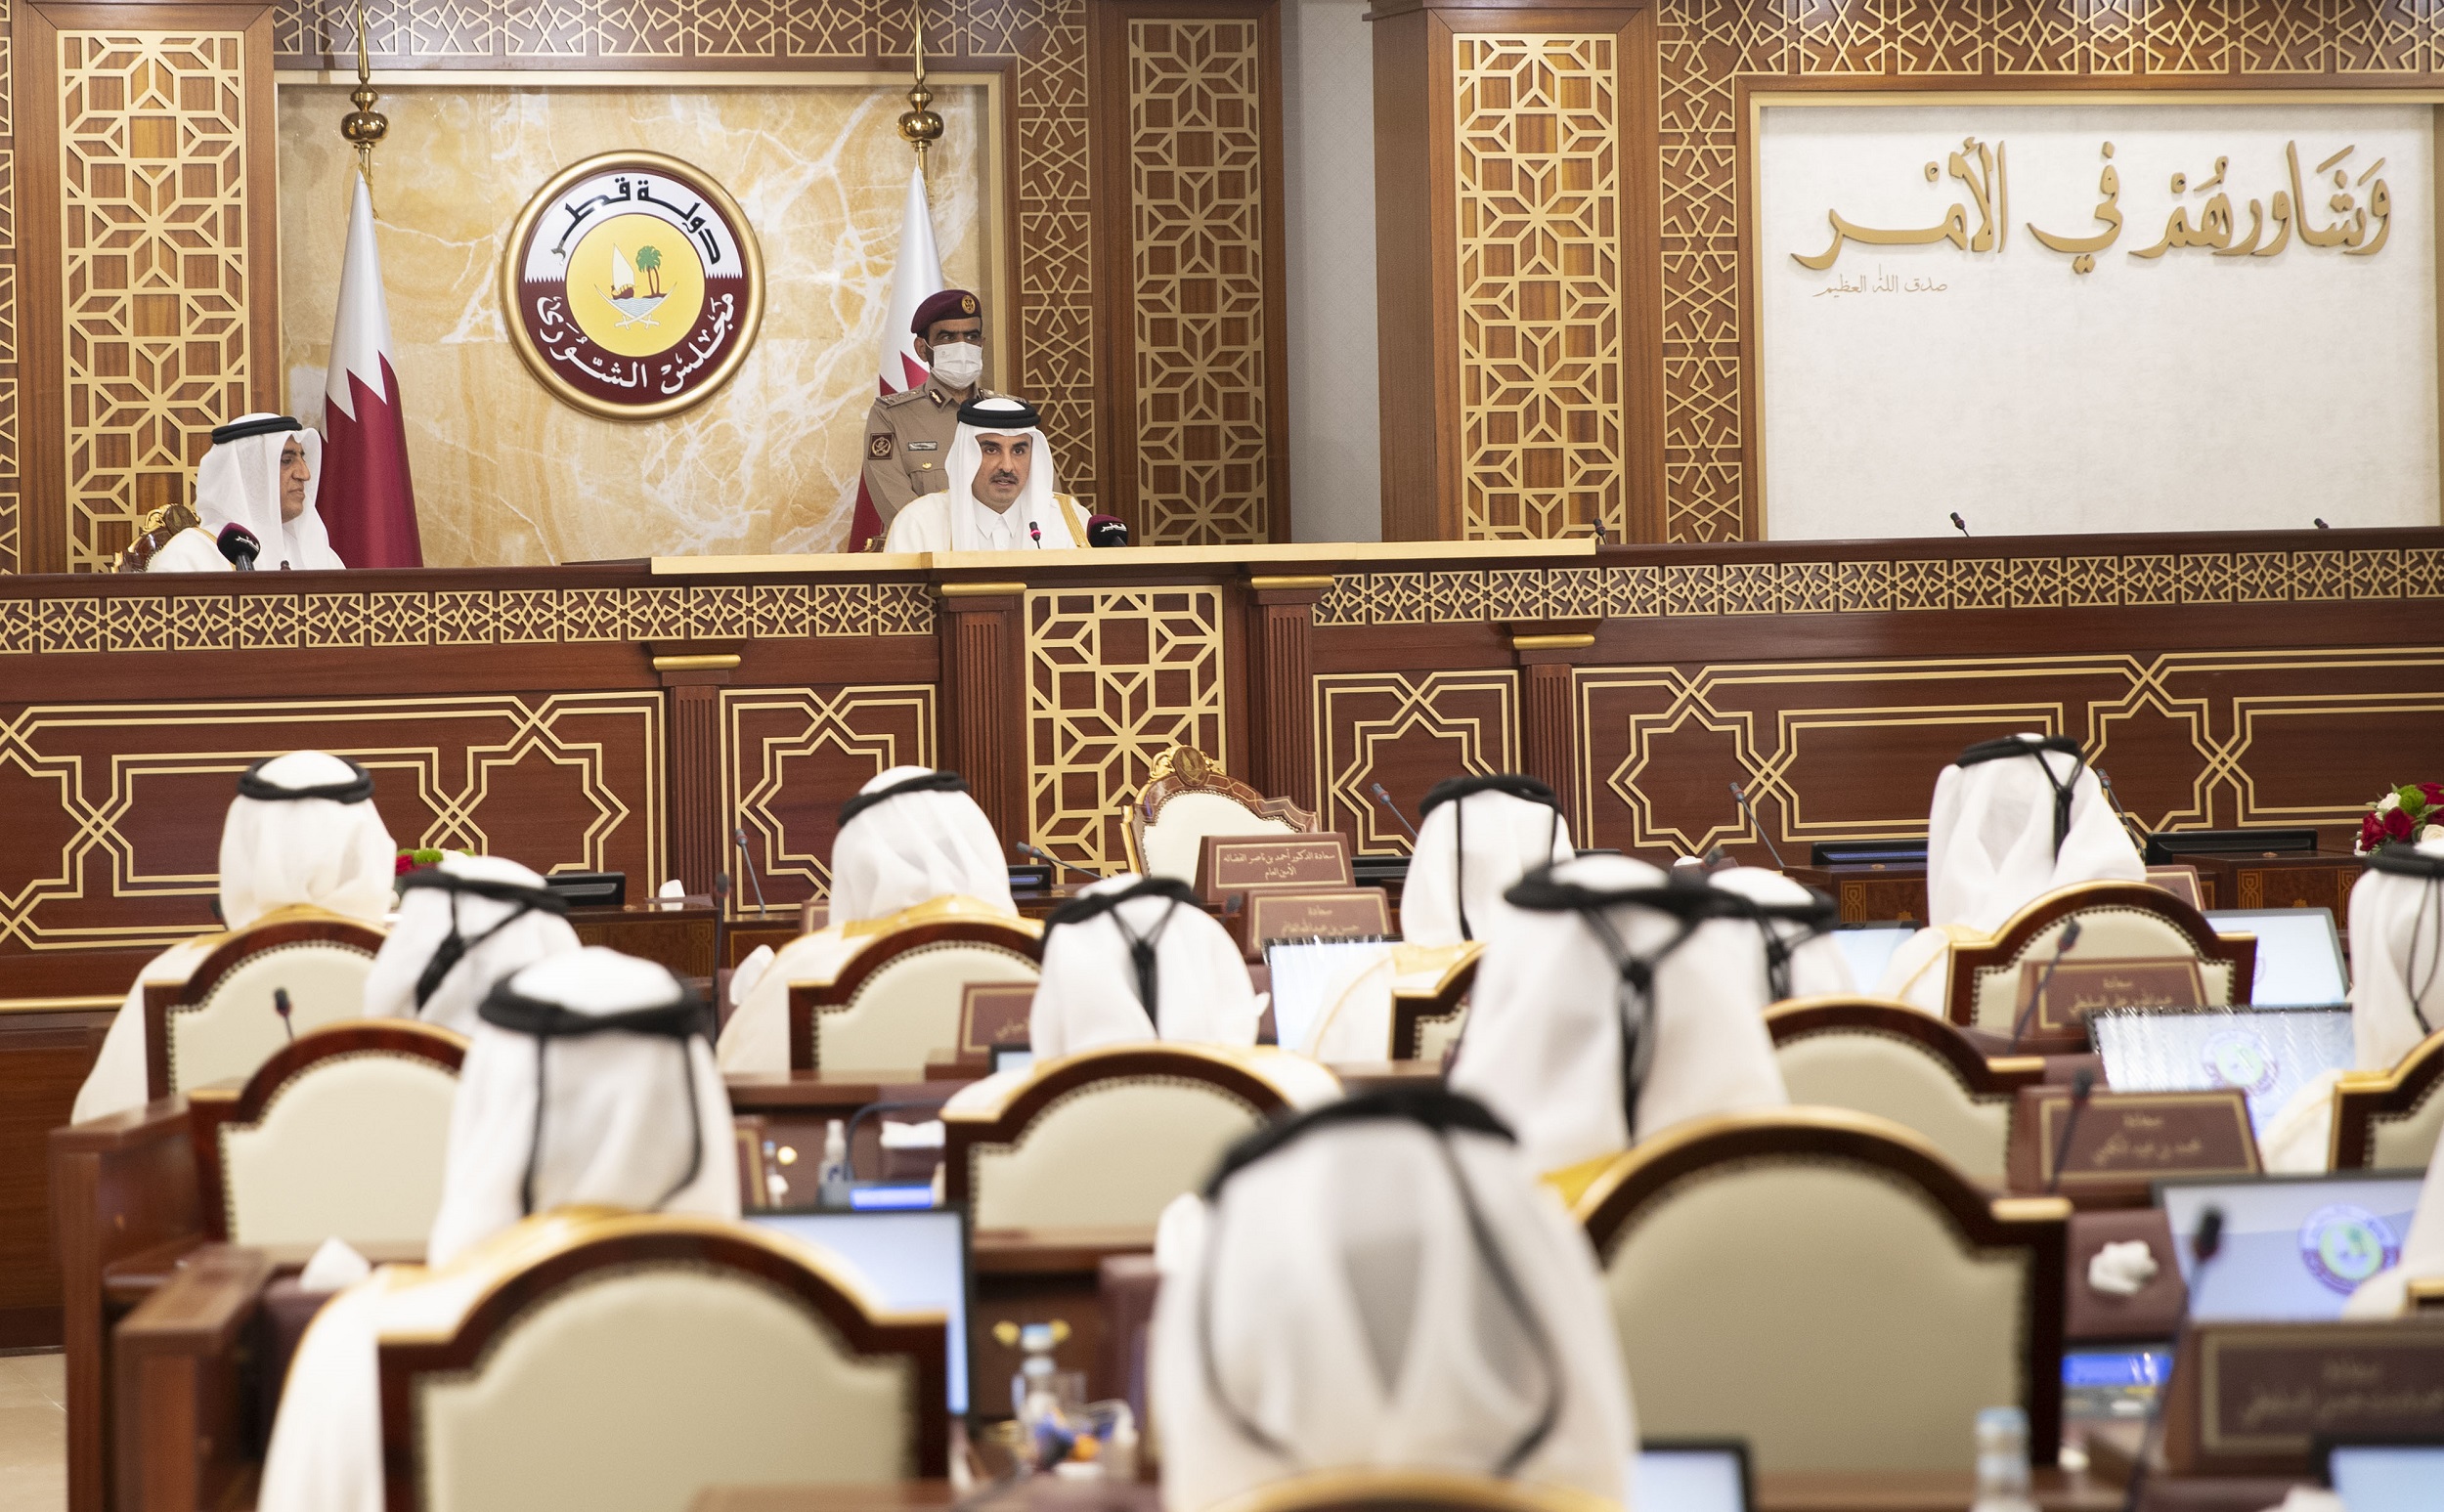 HH The Amir Inaugurates Shura Council Ordinary Session